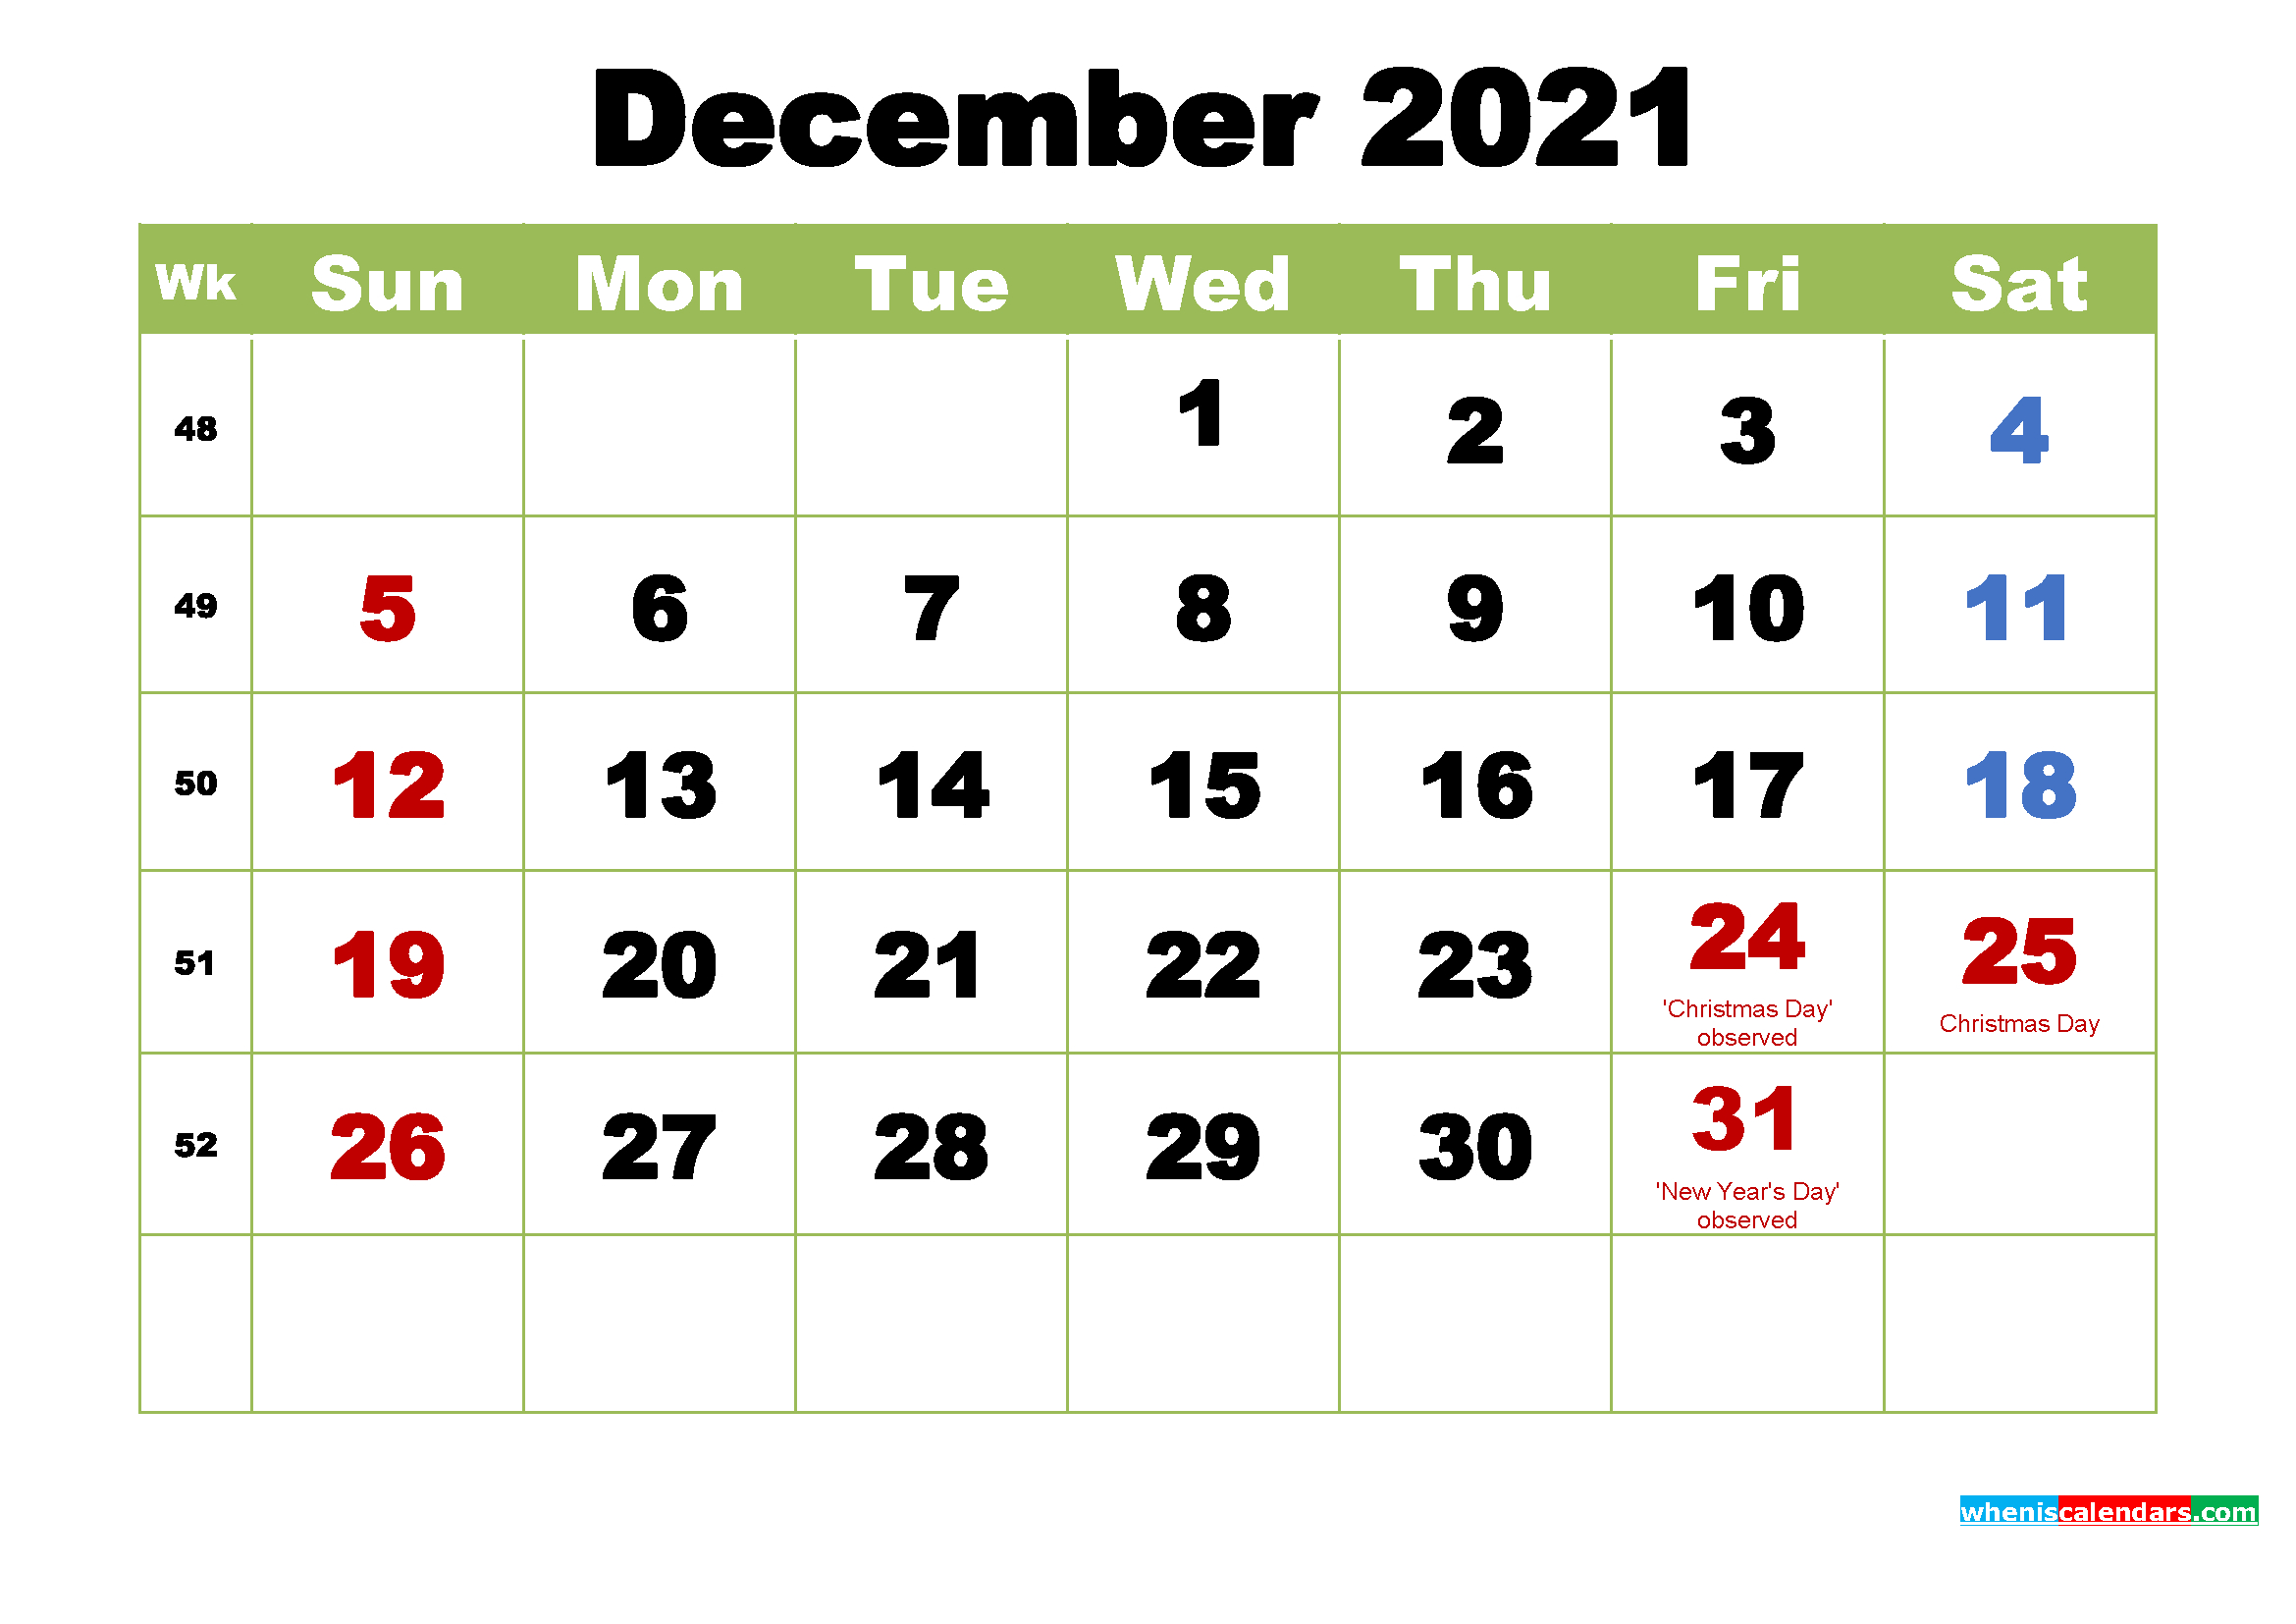 December 2021 Desktop Calendar With Holidays Online Calendar December 2020 And January 2021